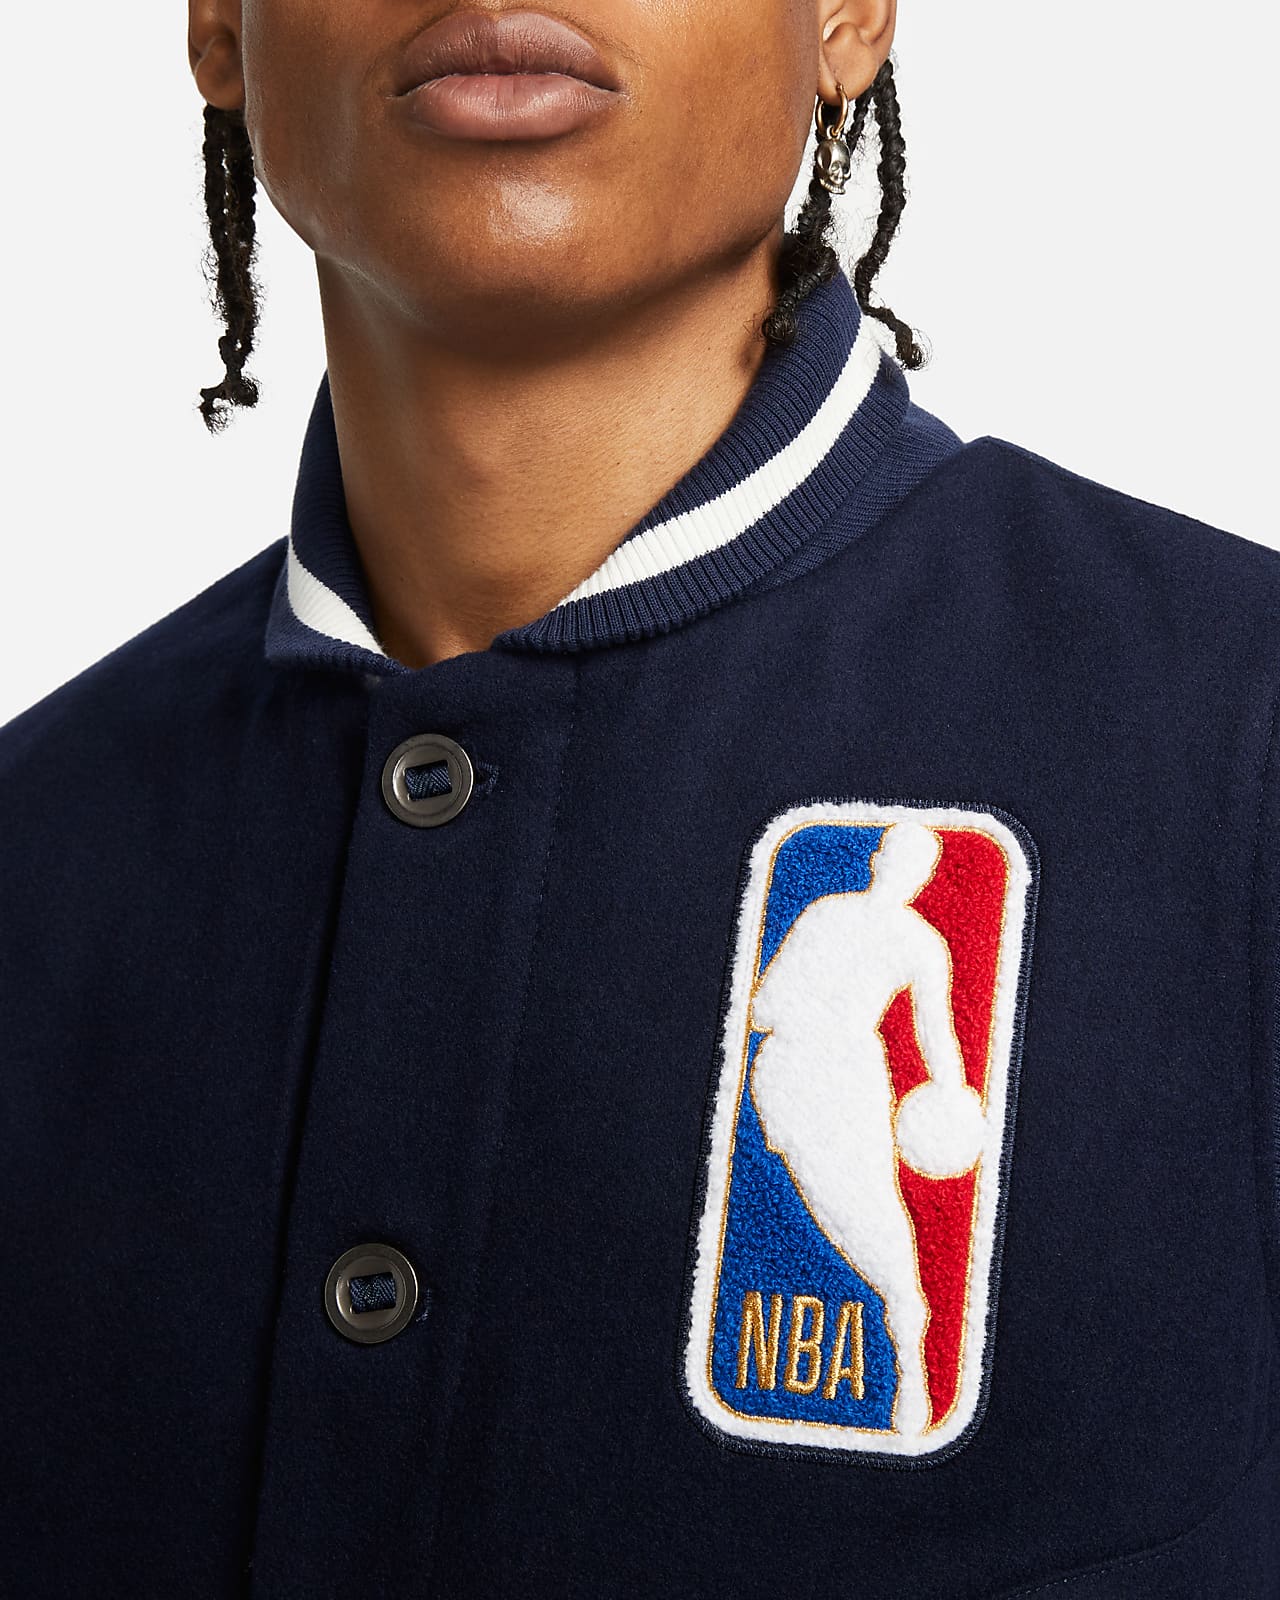 Team 31 Courtside Men's Nike NBA Destroyer Jacket